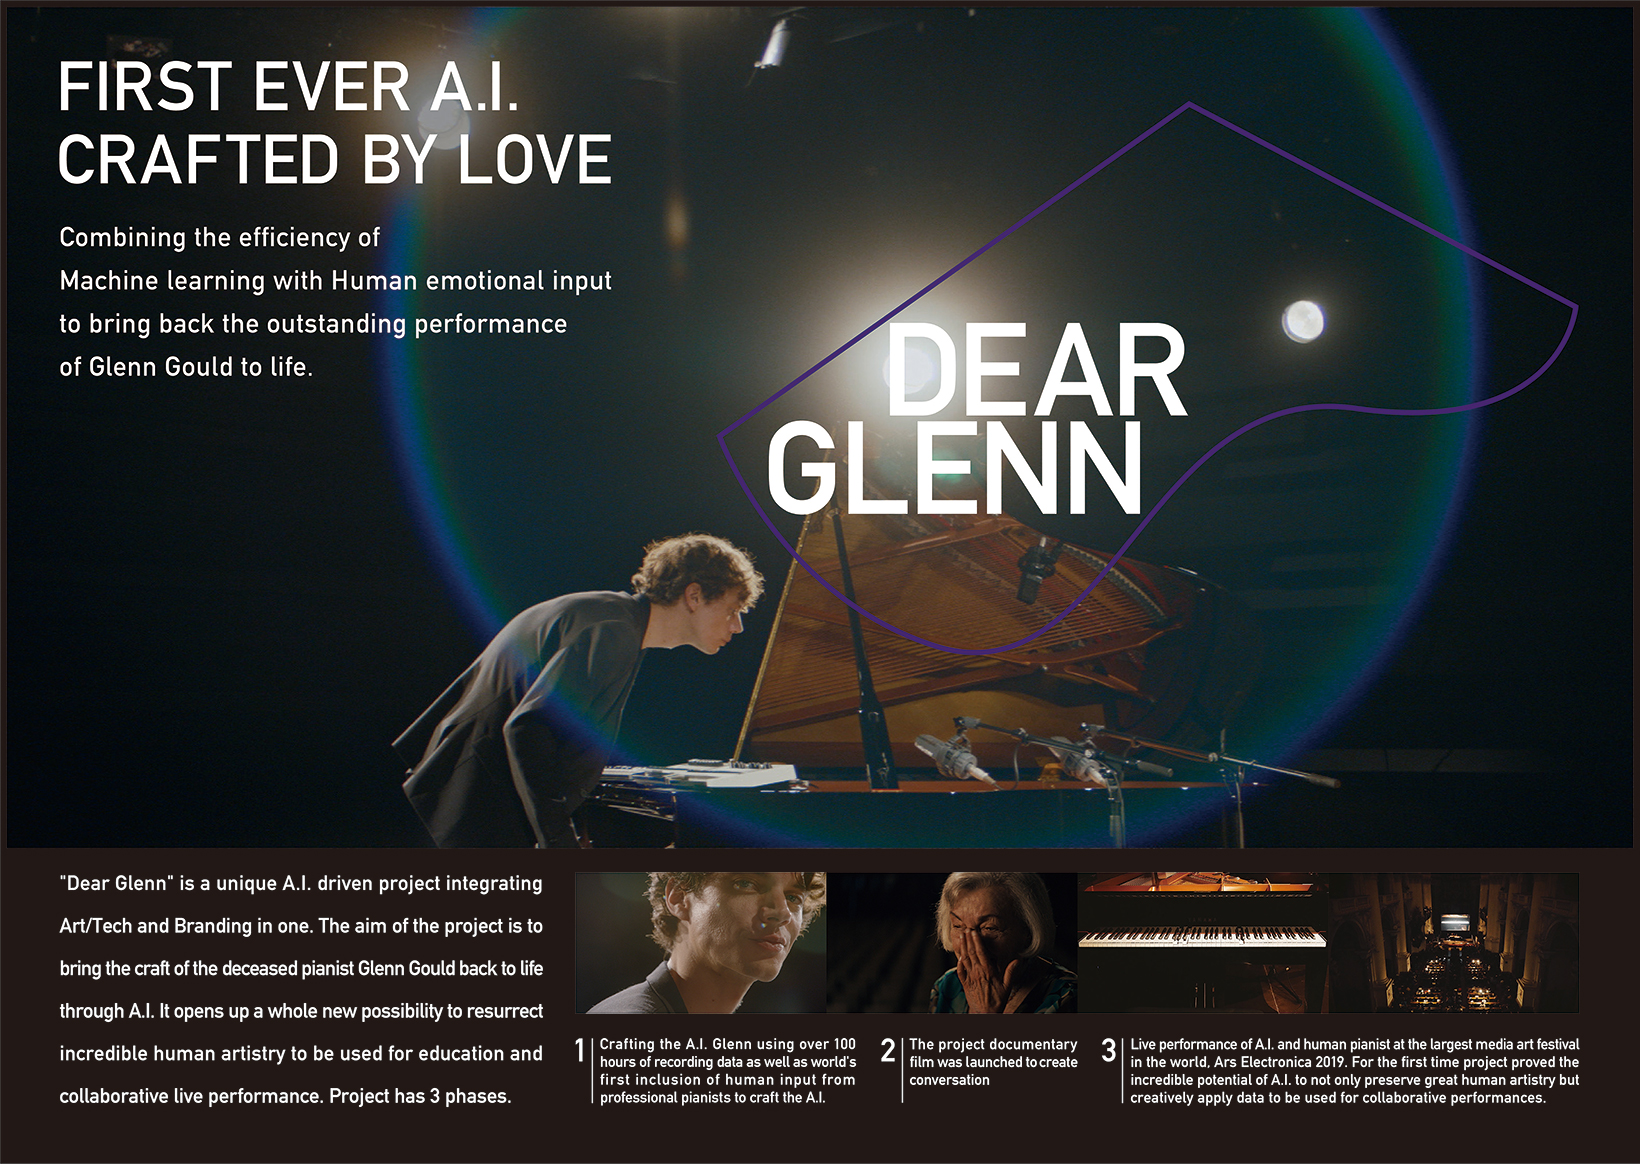 [ Image ] Dear Glenn presentation image for Cannes Lions Awards entry